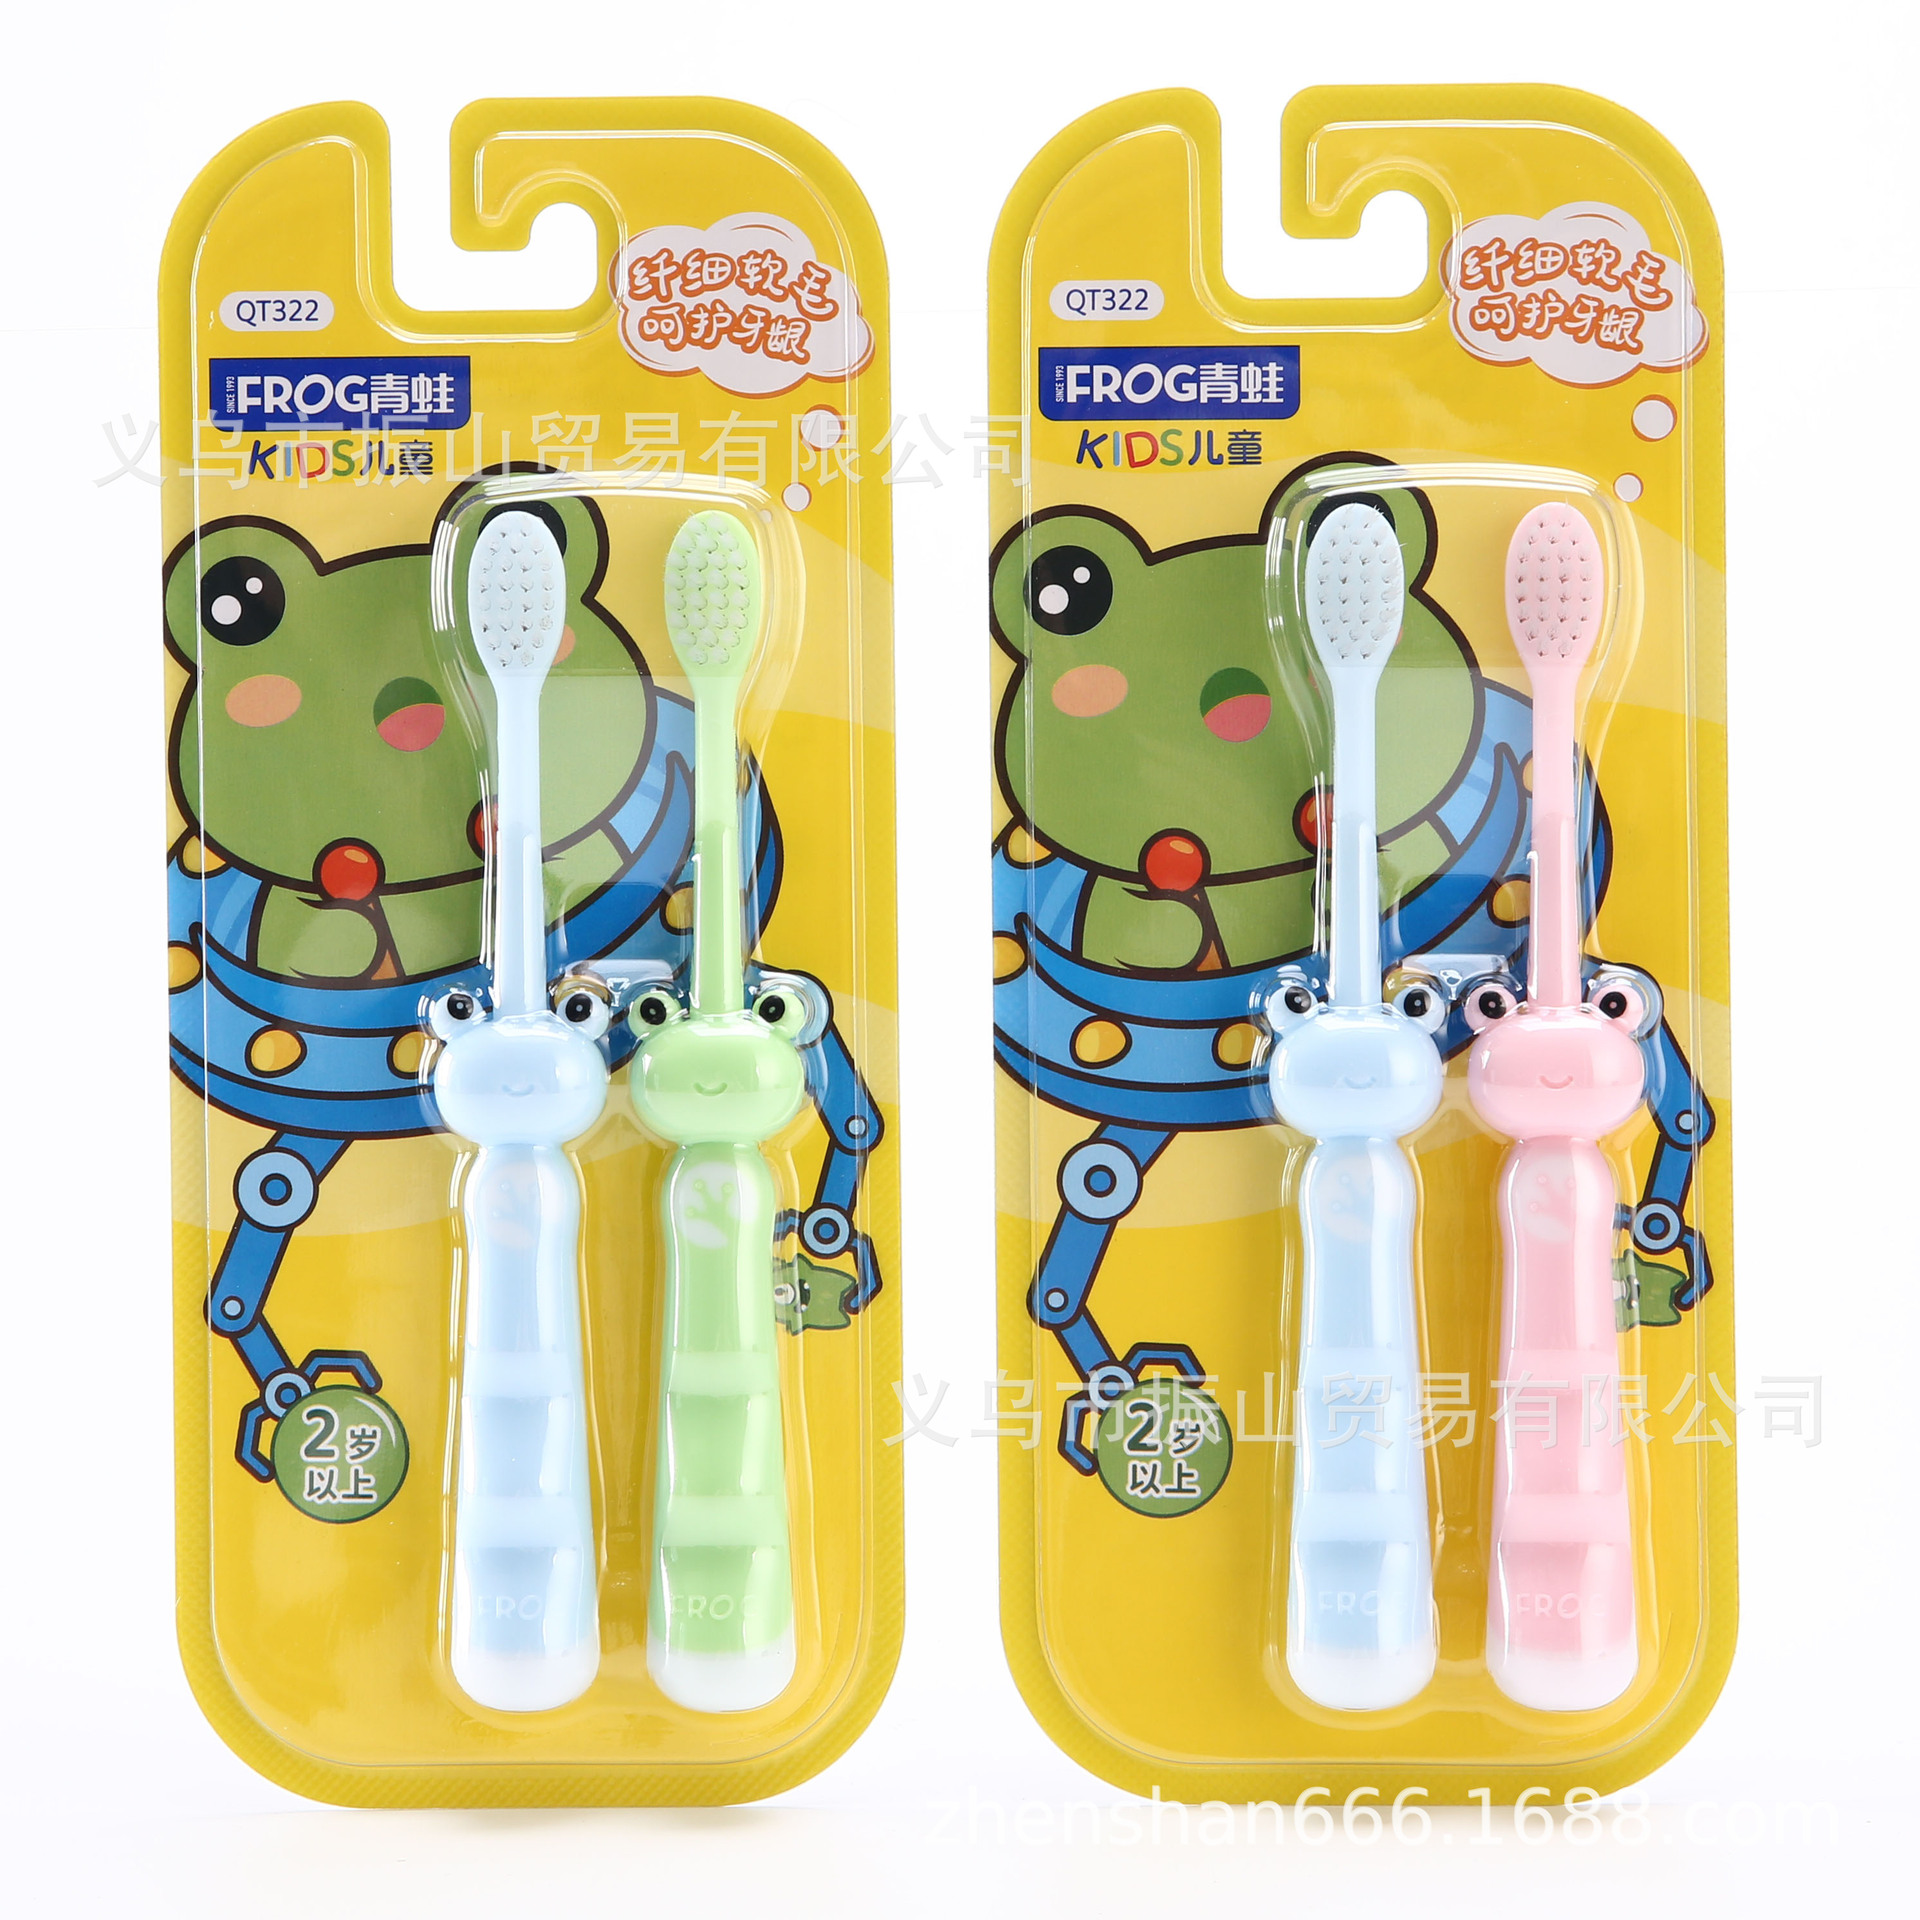 frog 322 set series ultra-fine soft fur delicate bruch head design cute cartoon handle soft fur children‘s toothbrush